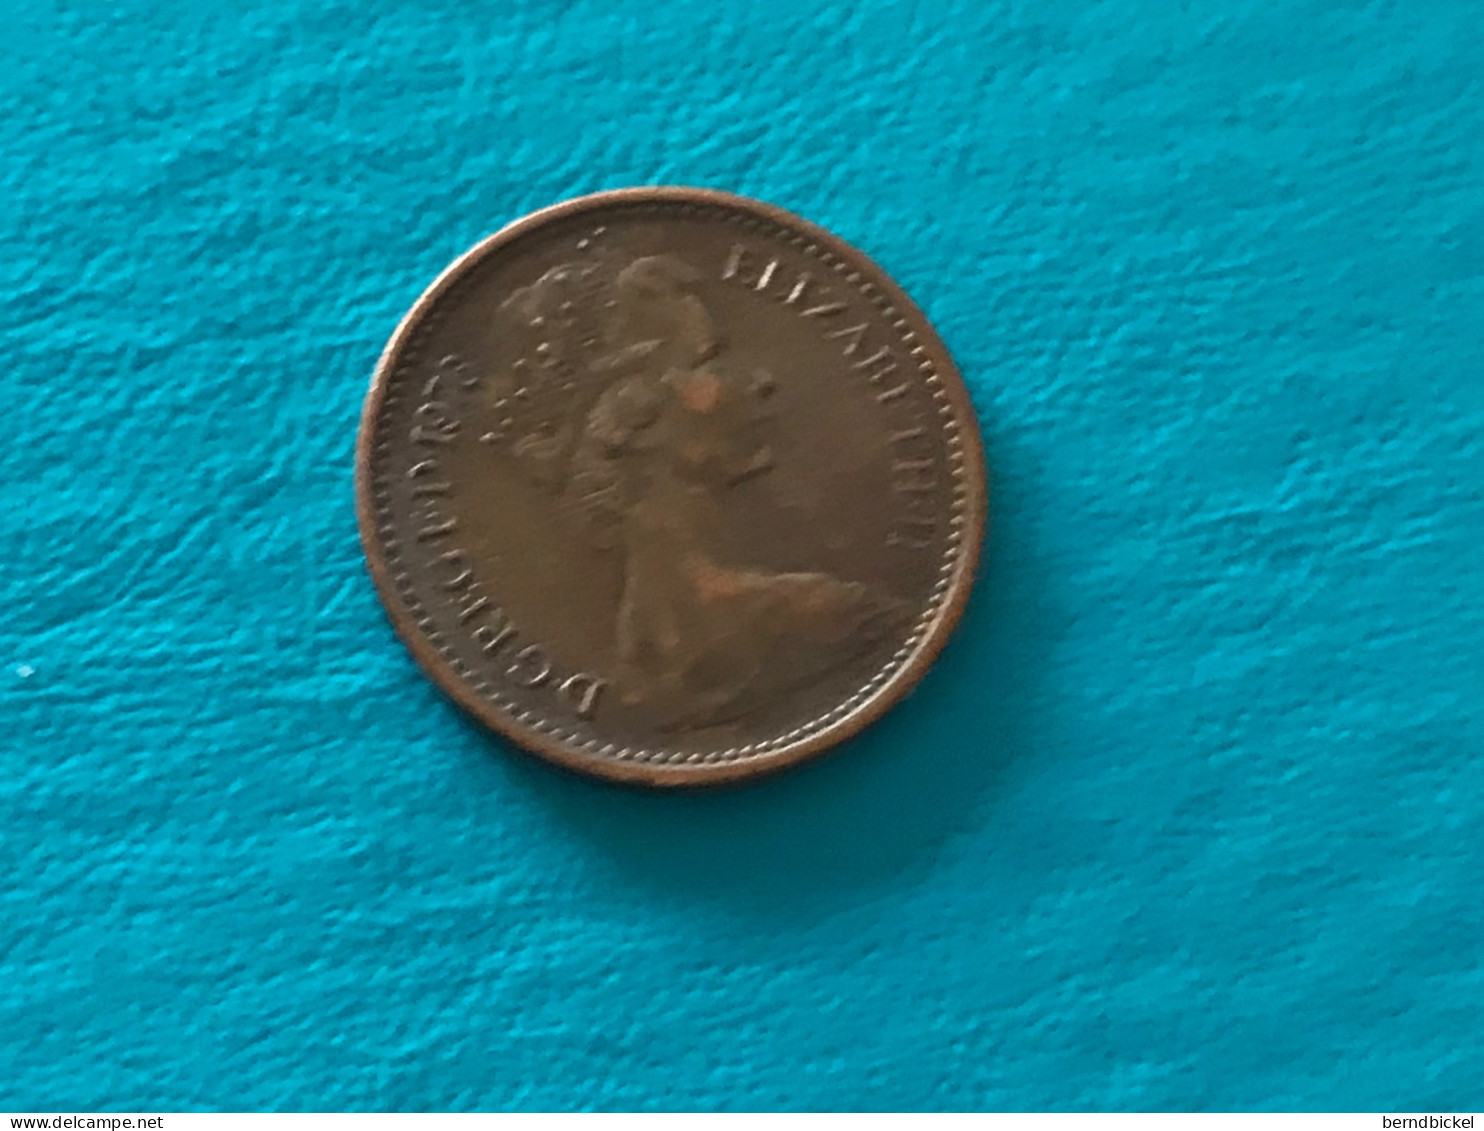 Münze Münzen Umlaufmünze Großbritannien 1/2 Penny 1973 - 1/2 Penny & 1/2 New Penny